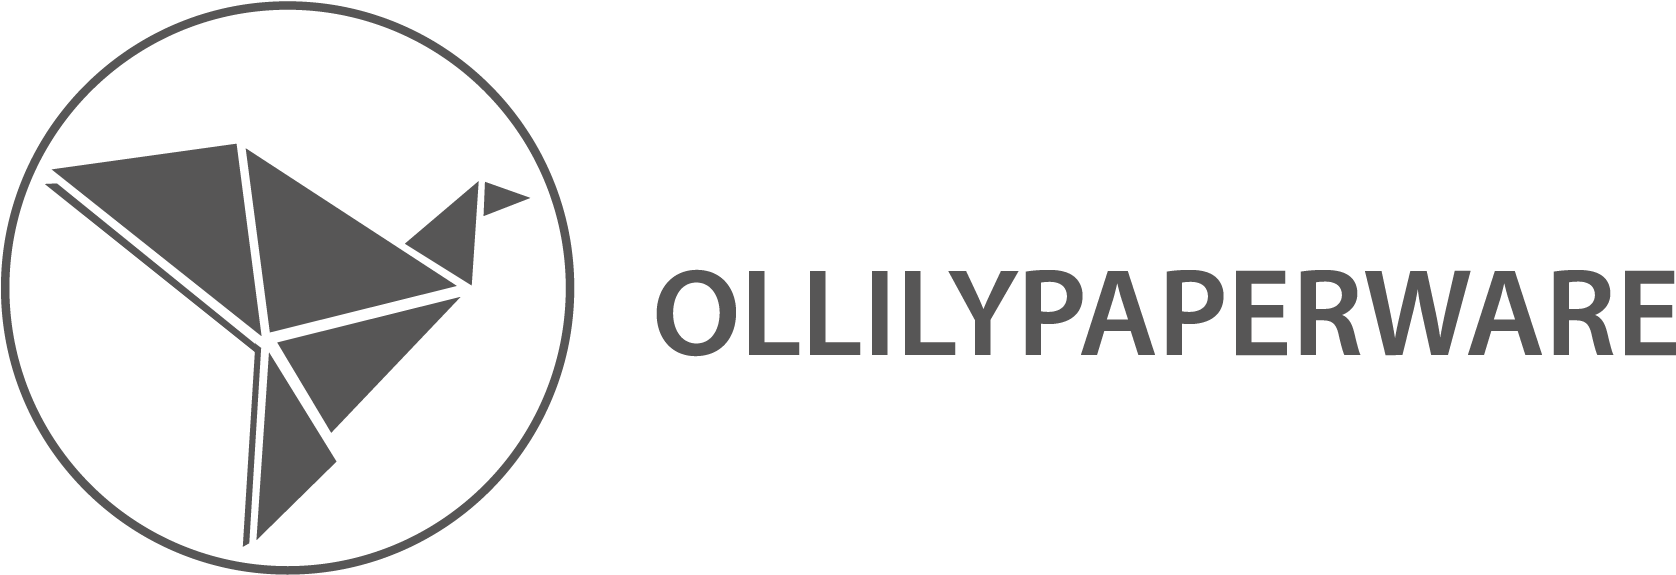 Origami Bird Logo Ollily Paperware PNG